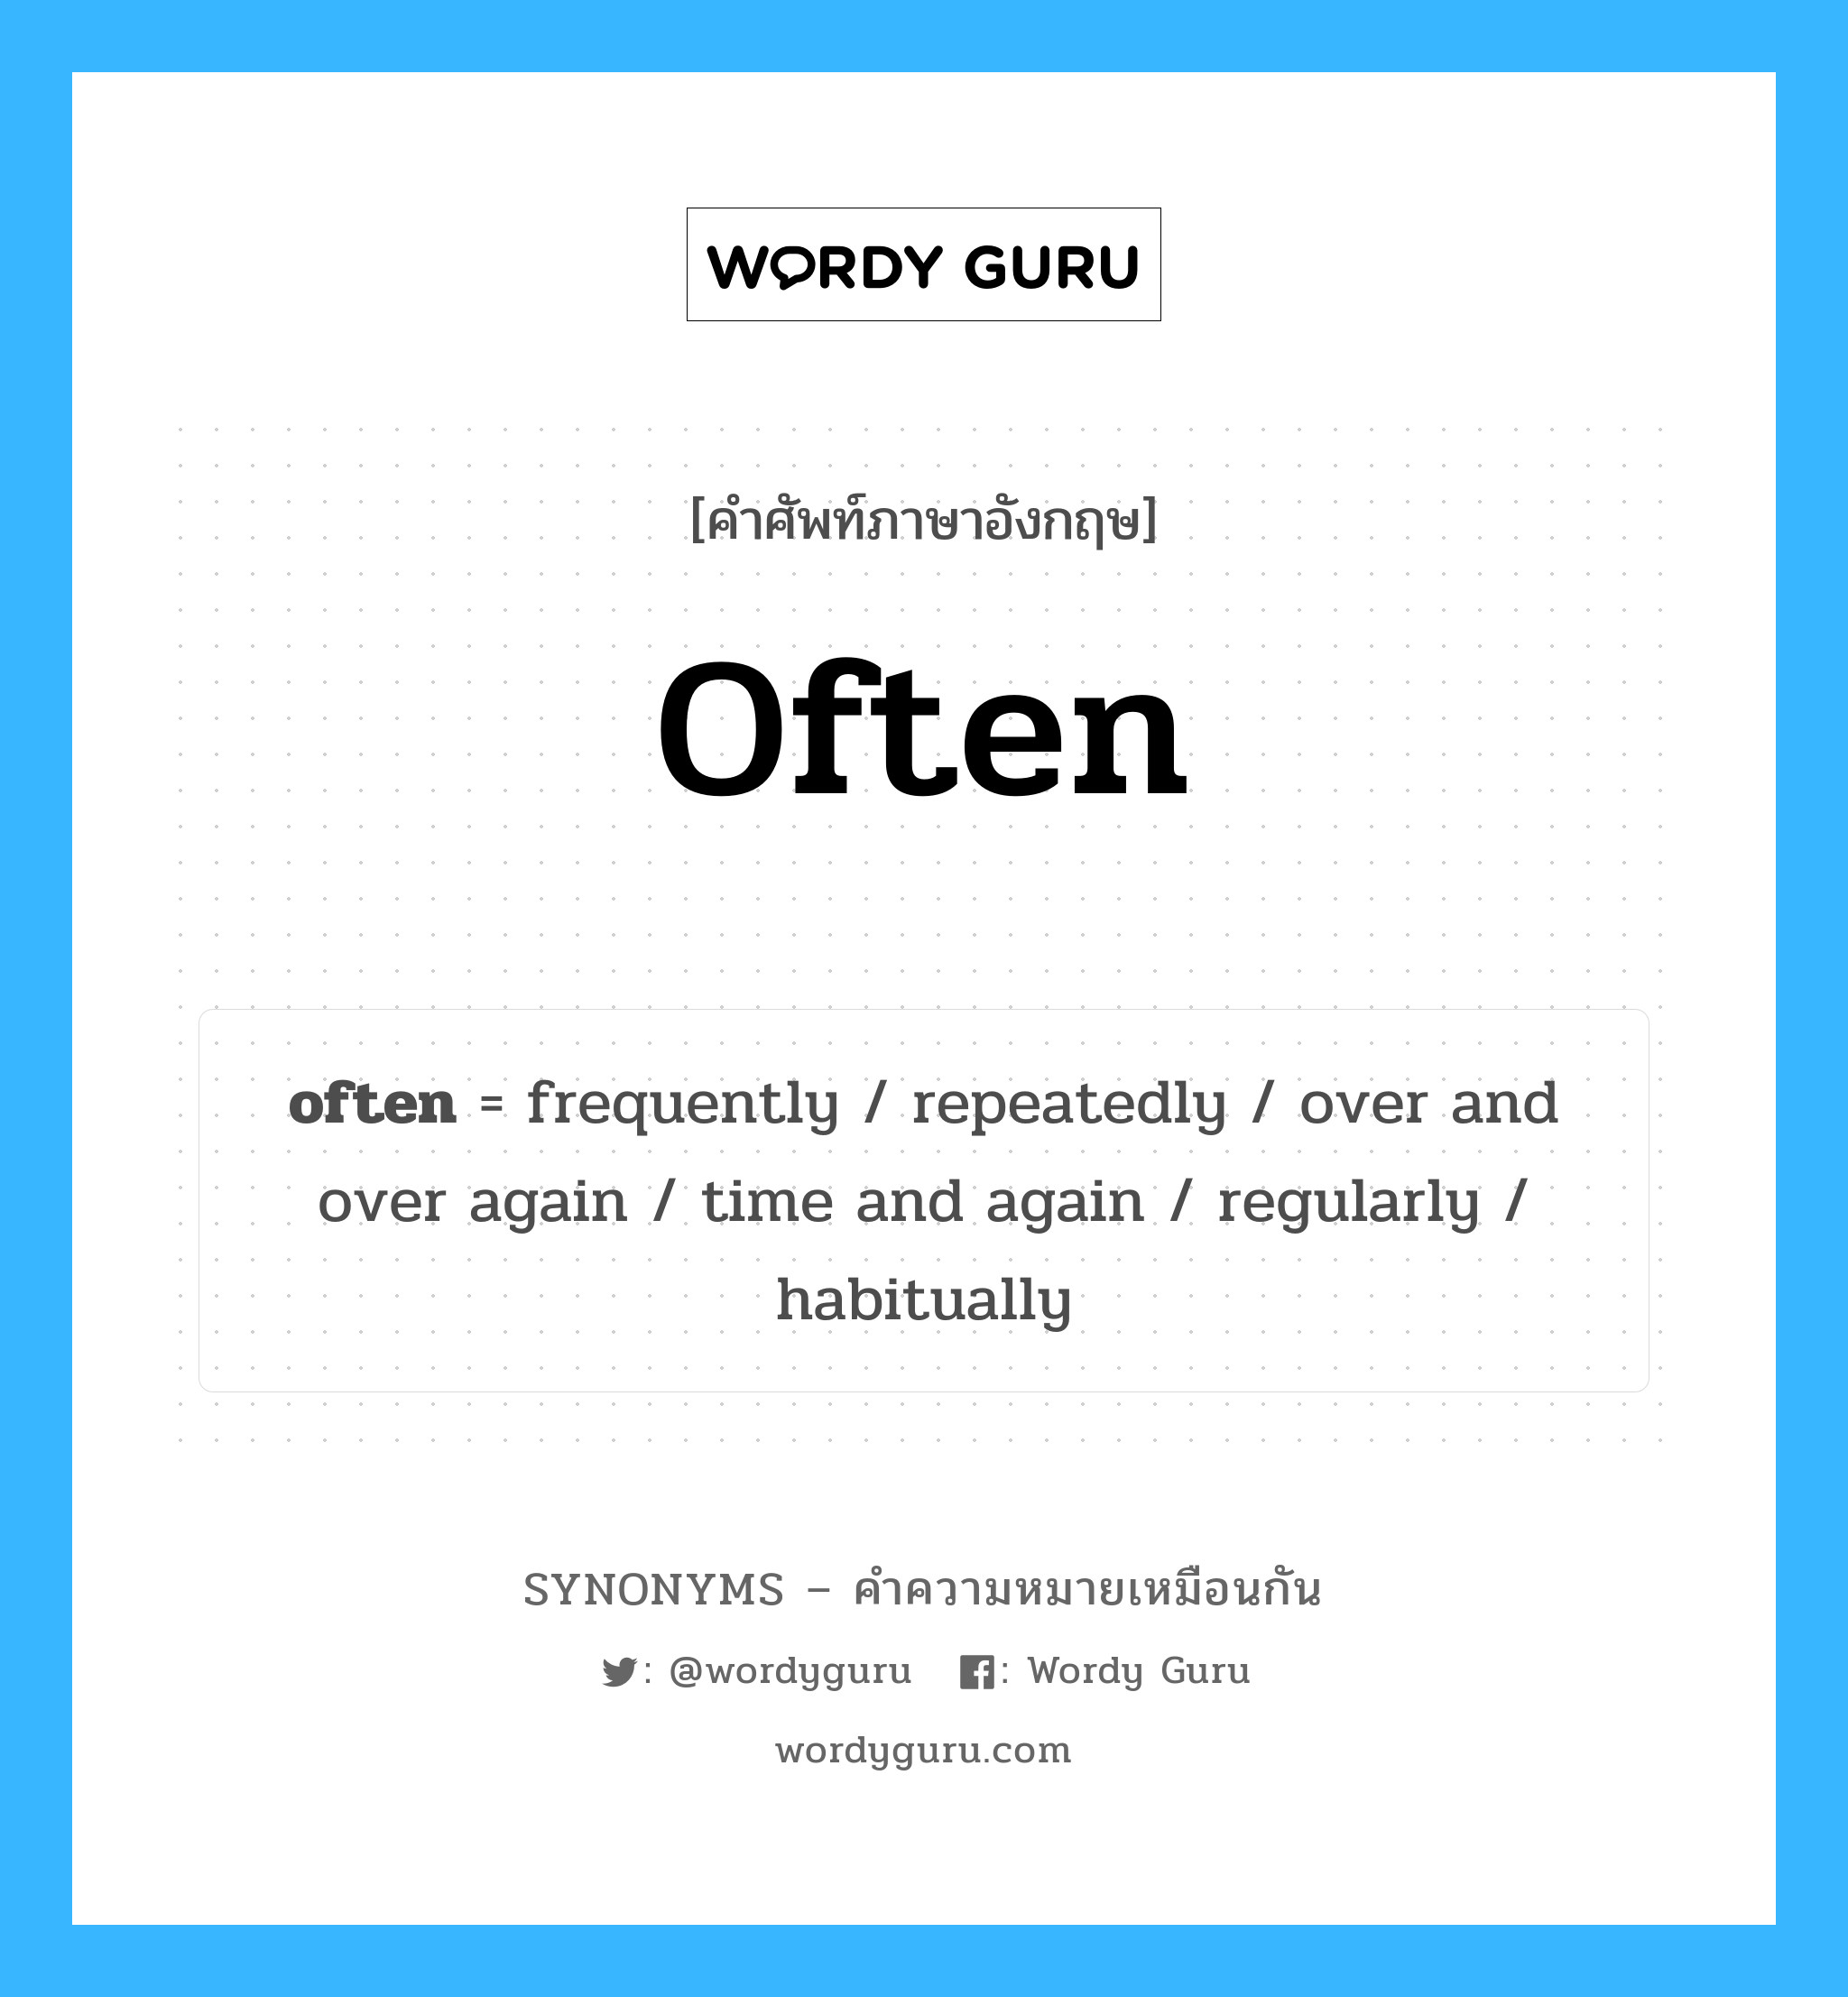 over and over again เป็นหนึ่งใน often และมีคำอื่น ๆ อีกดังนี้, คำศัพท์ภาษาอังกฤษ over and over again ความหมายคล้ายกันกับ often แปลว่า ซ้ำแล้วซ้ำอีก หมวด often